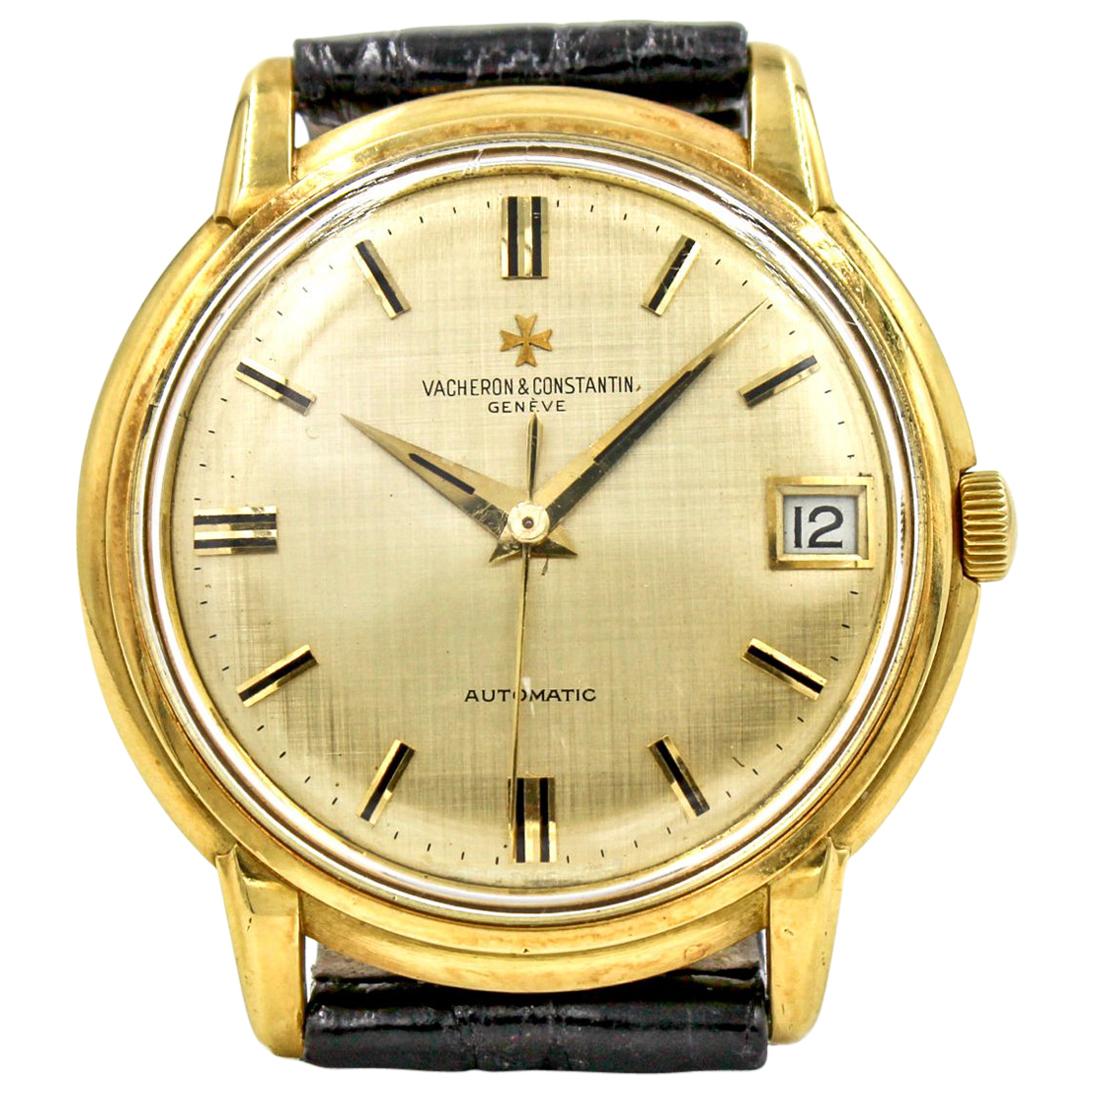 Vacheron Constantin 18 Karat Yellow Gold Men's Wrist Watch with Textured Dial For Sale